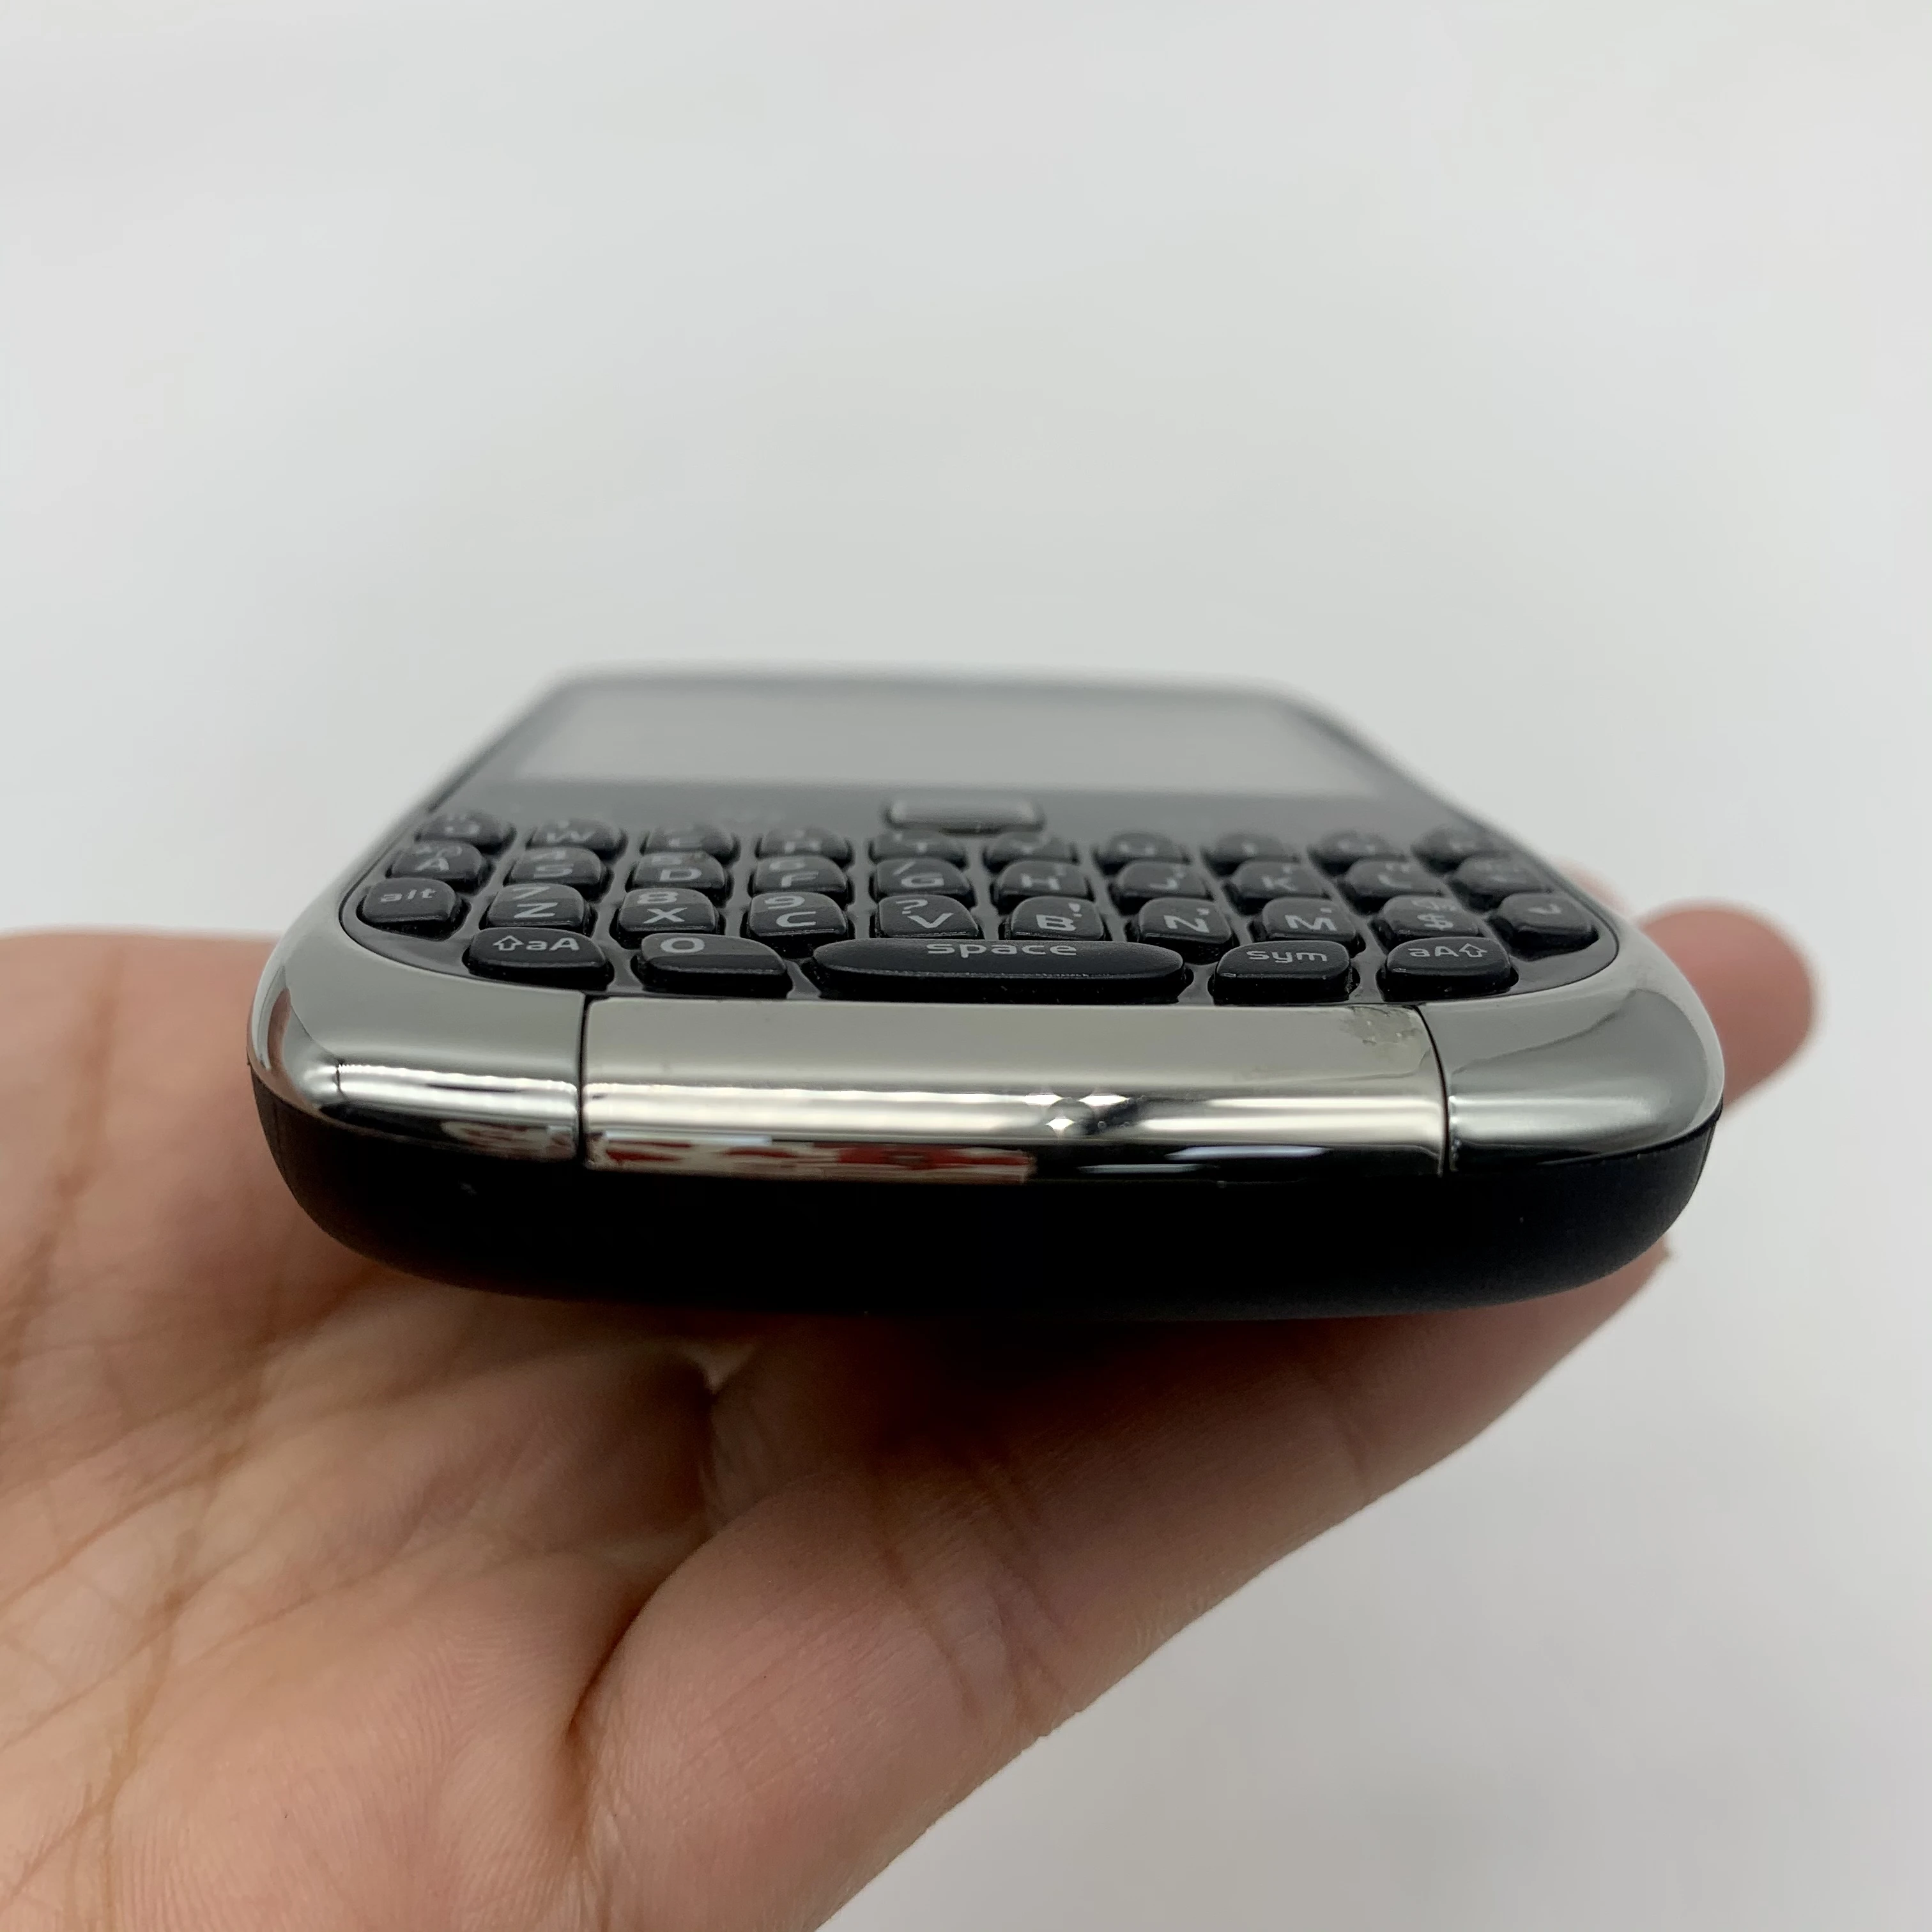 blackberry 9300 refurbished original 9300 curve mobile phone smartphone unlocked 3g wifi refurbished cellphones free shipping free global shipping